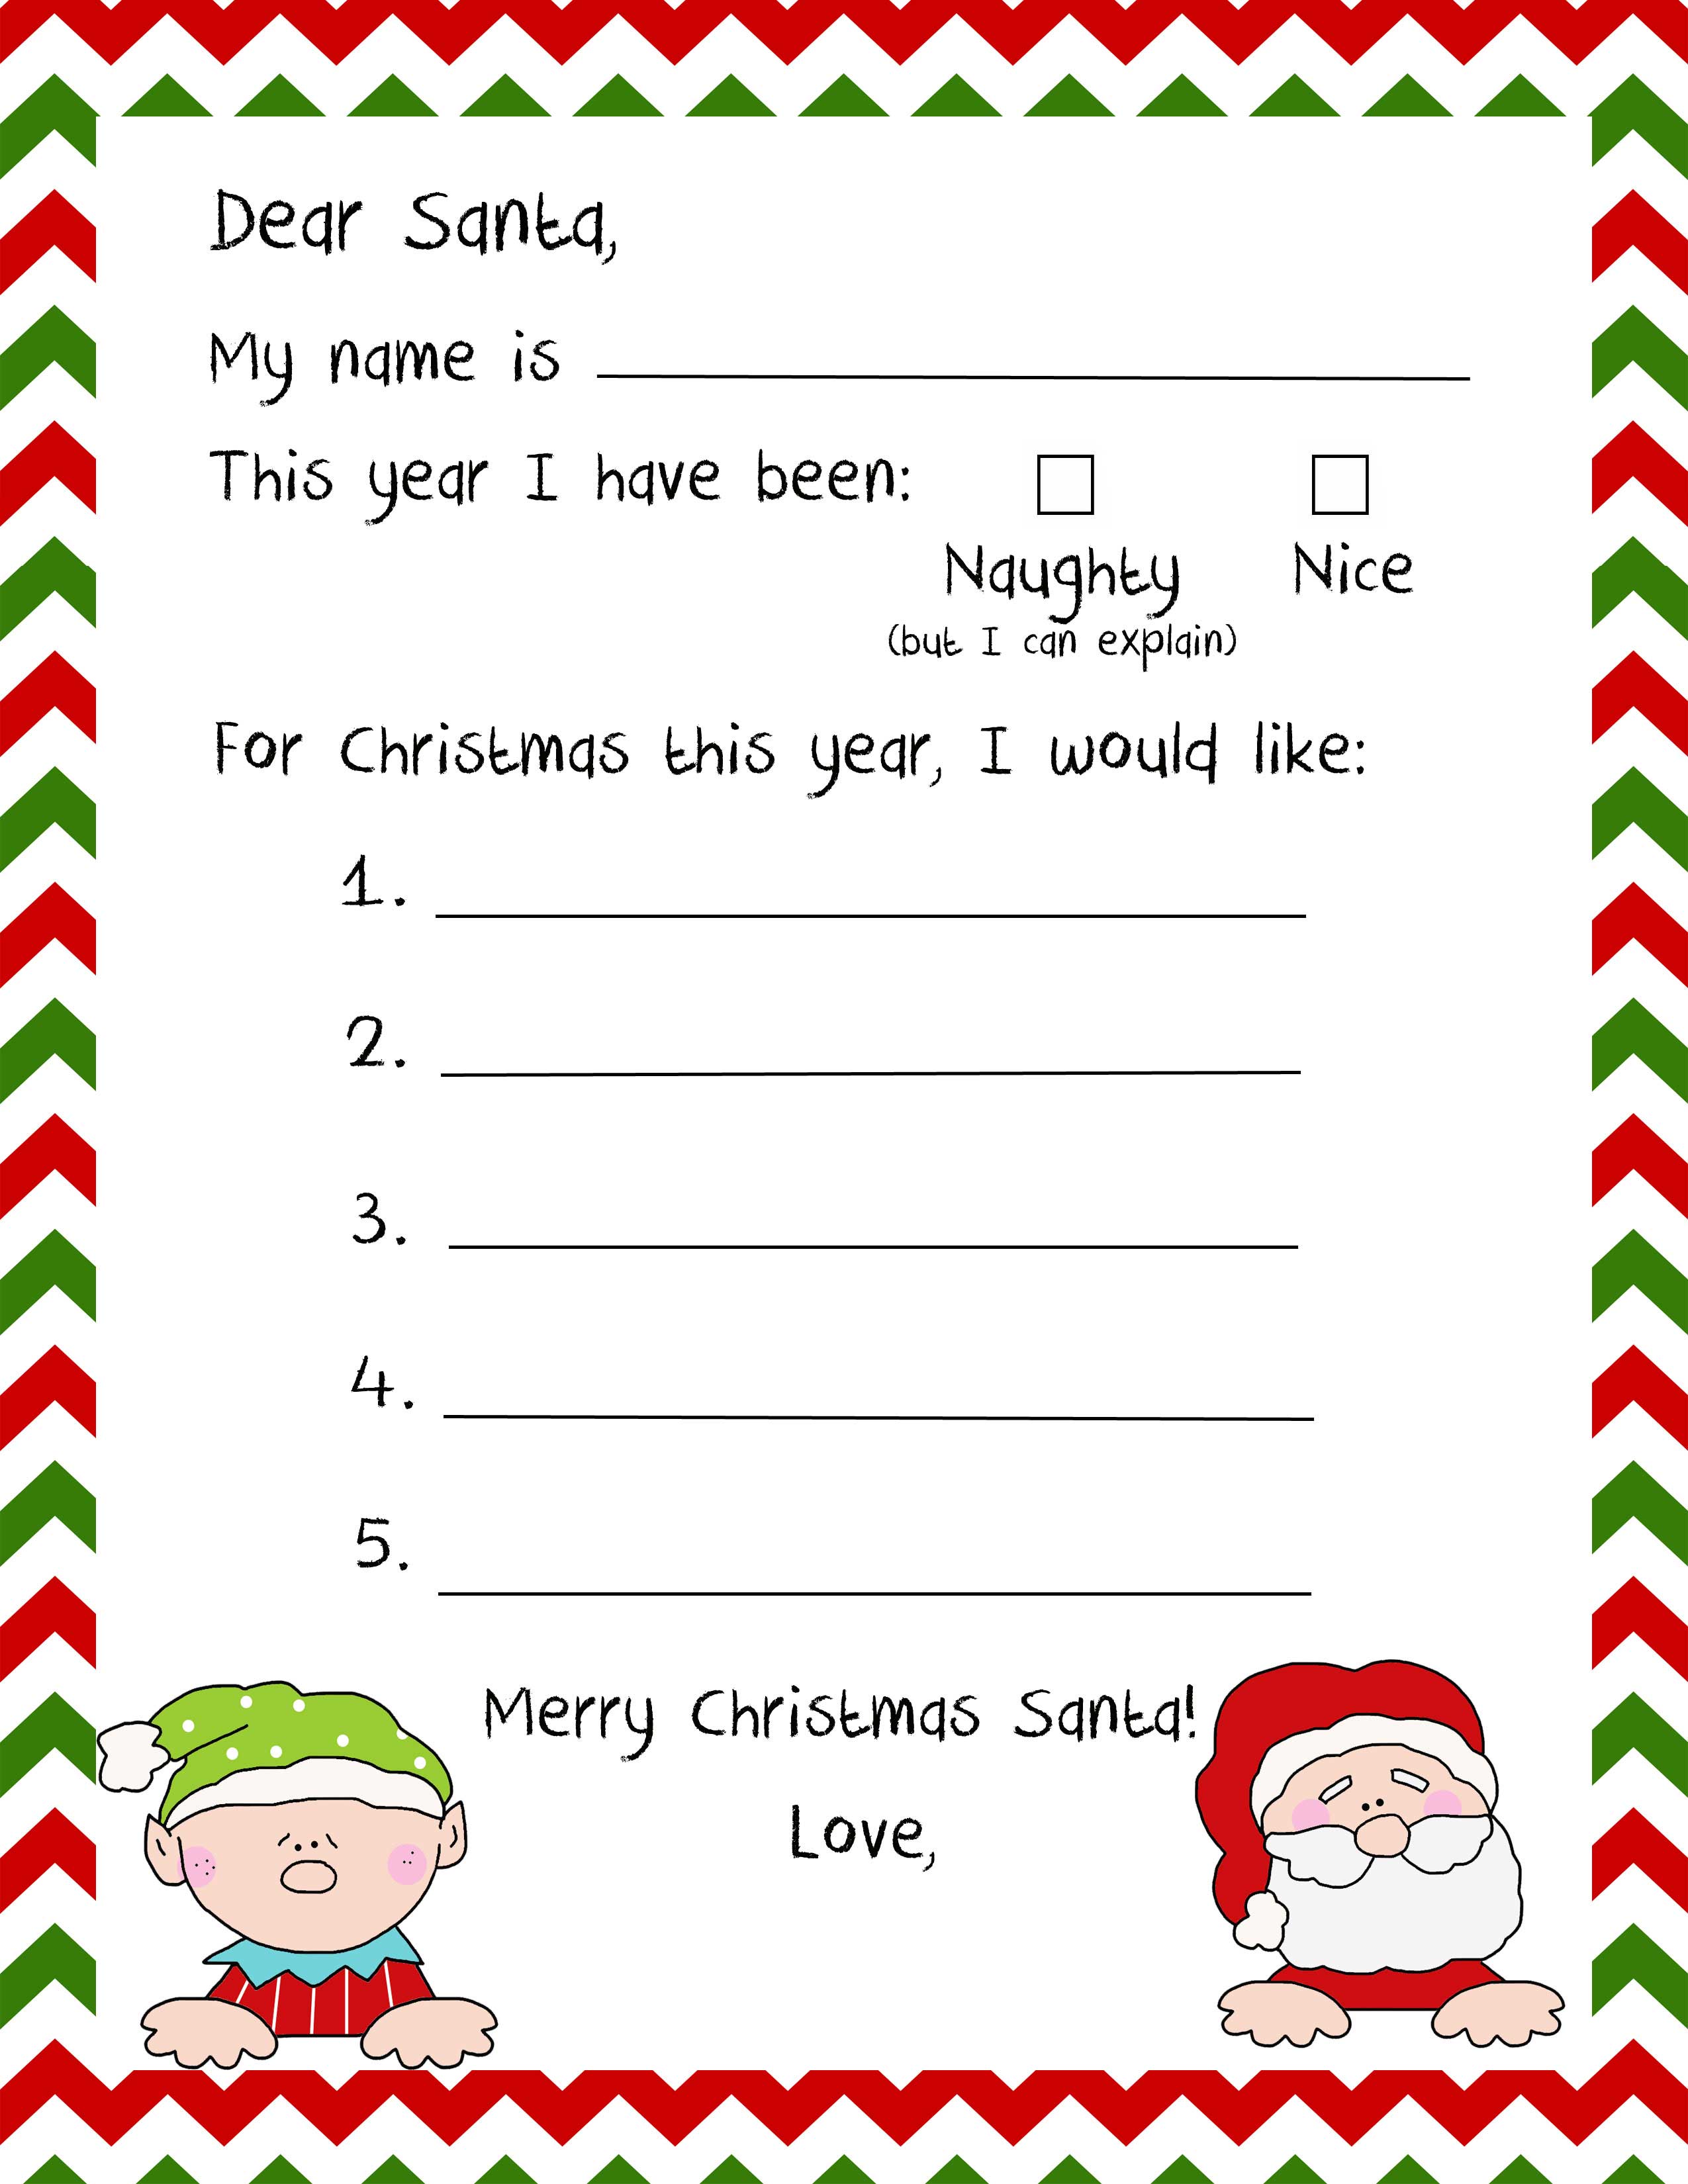 So nice hd letter to santa